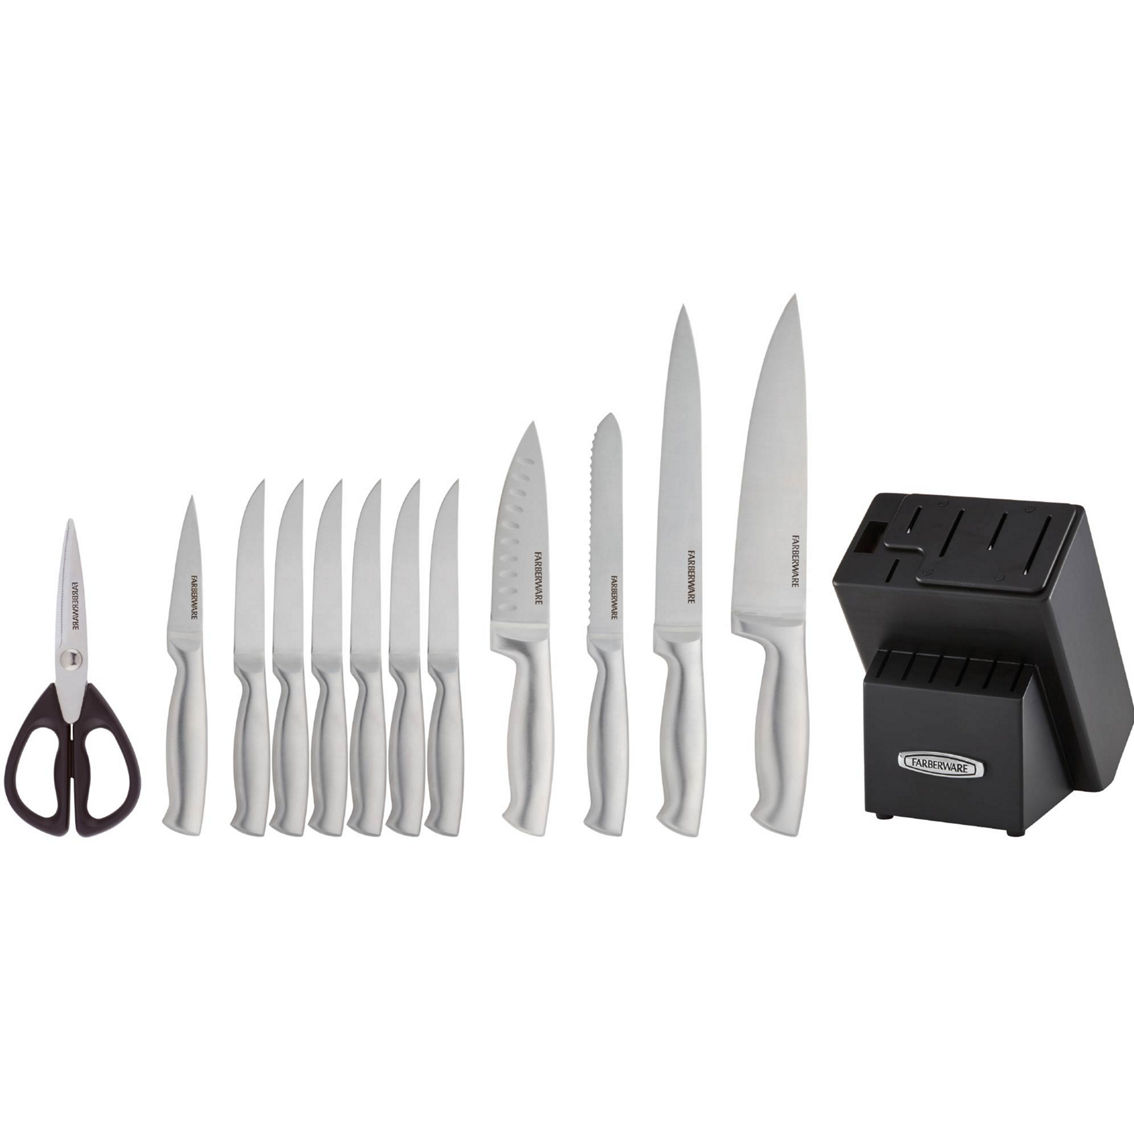 Farberware 13 Pc. Edgekeeper Pro Self Sharpening Cutlery Set - Image 3 of 3